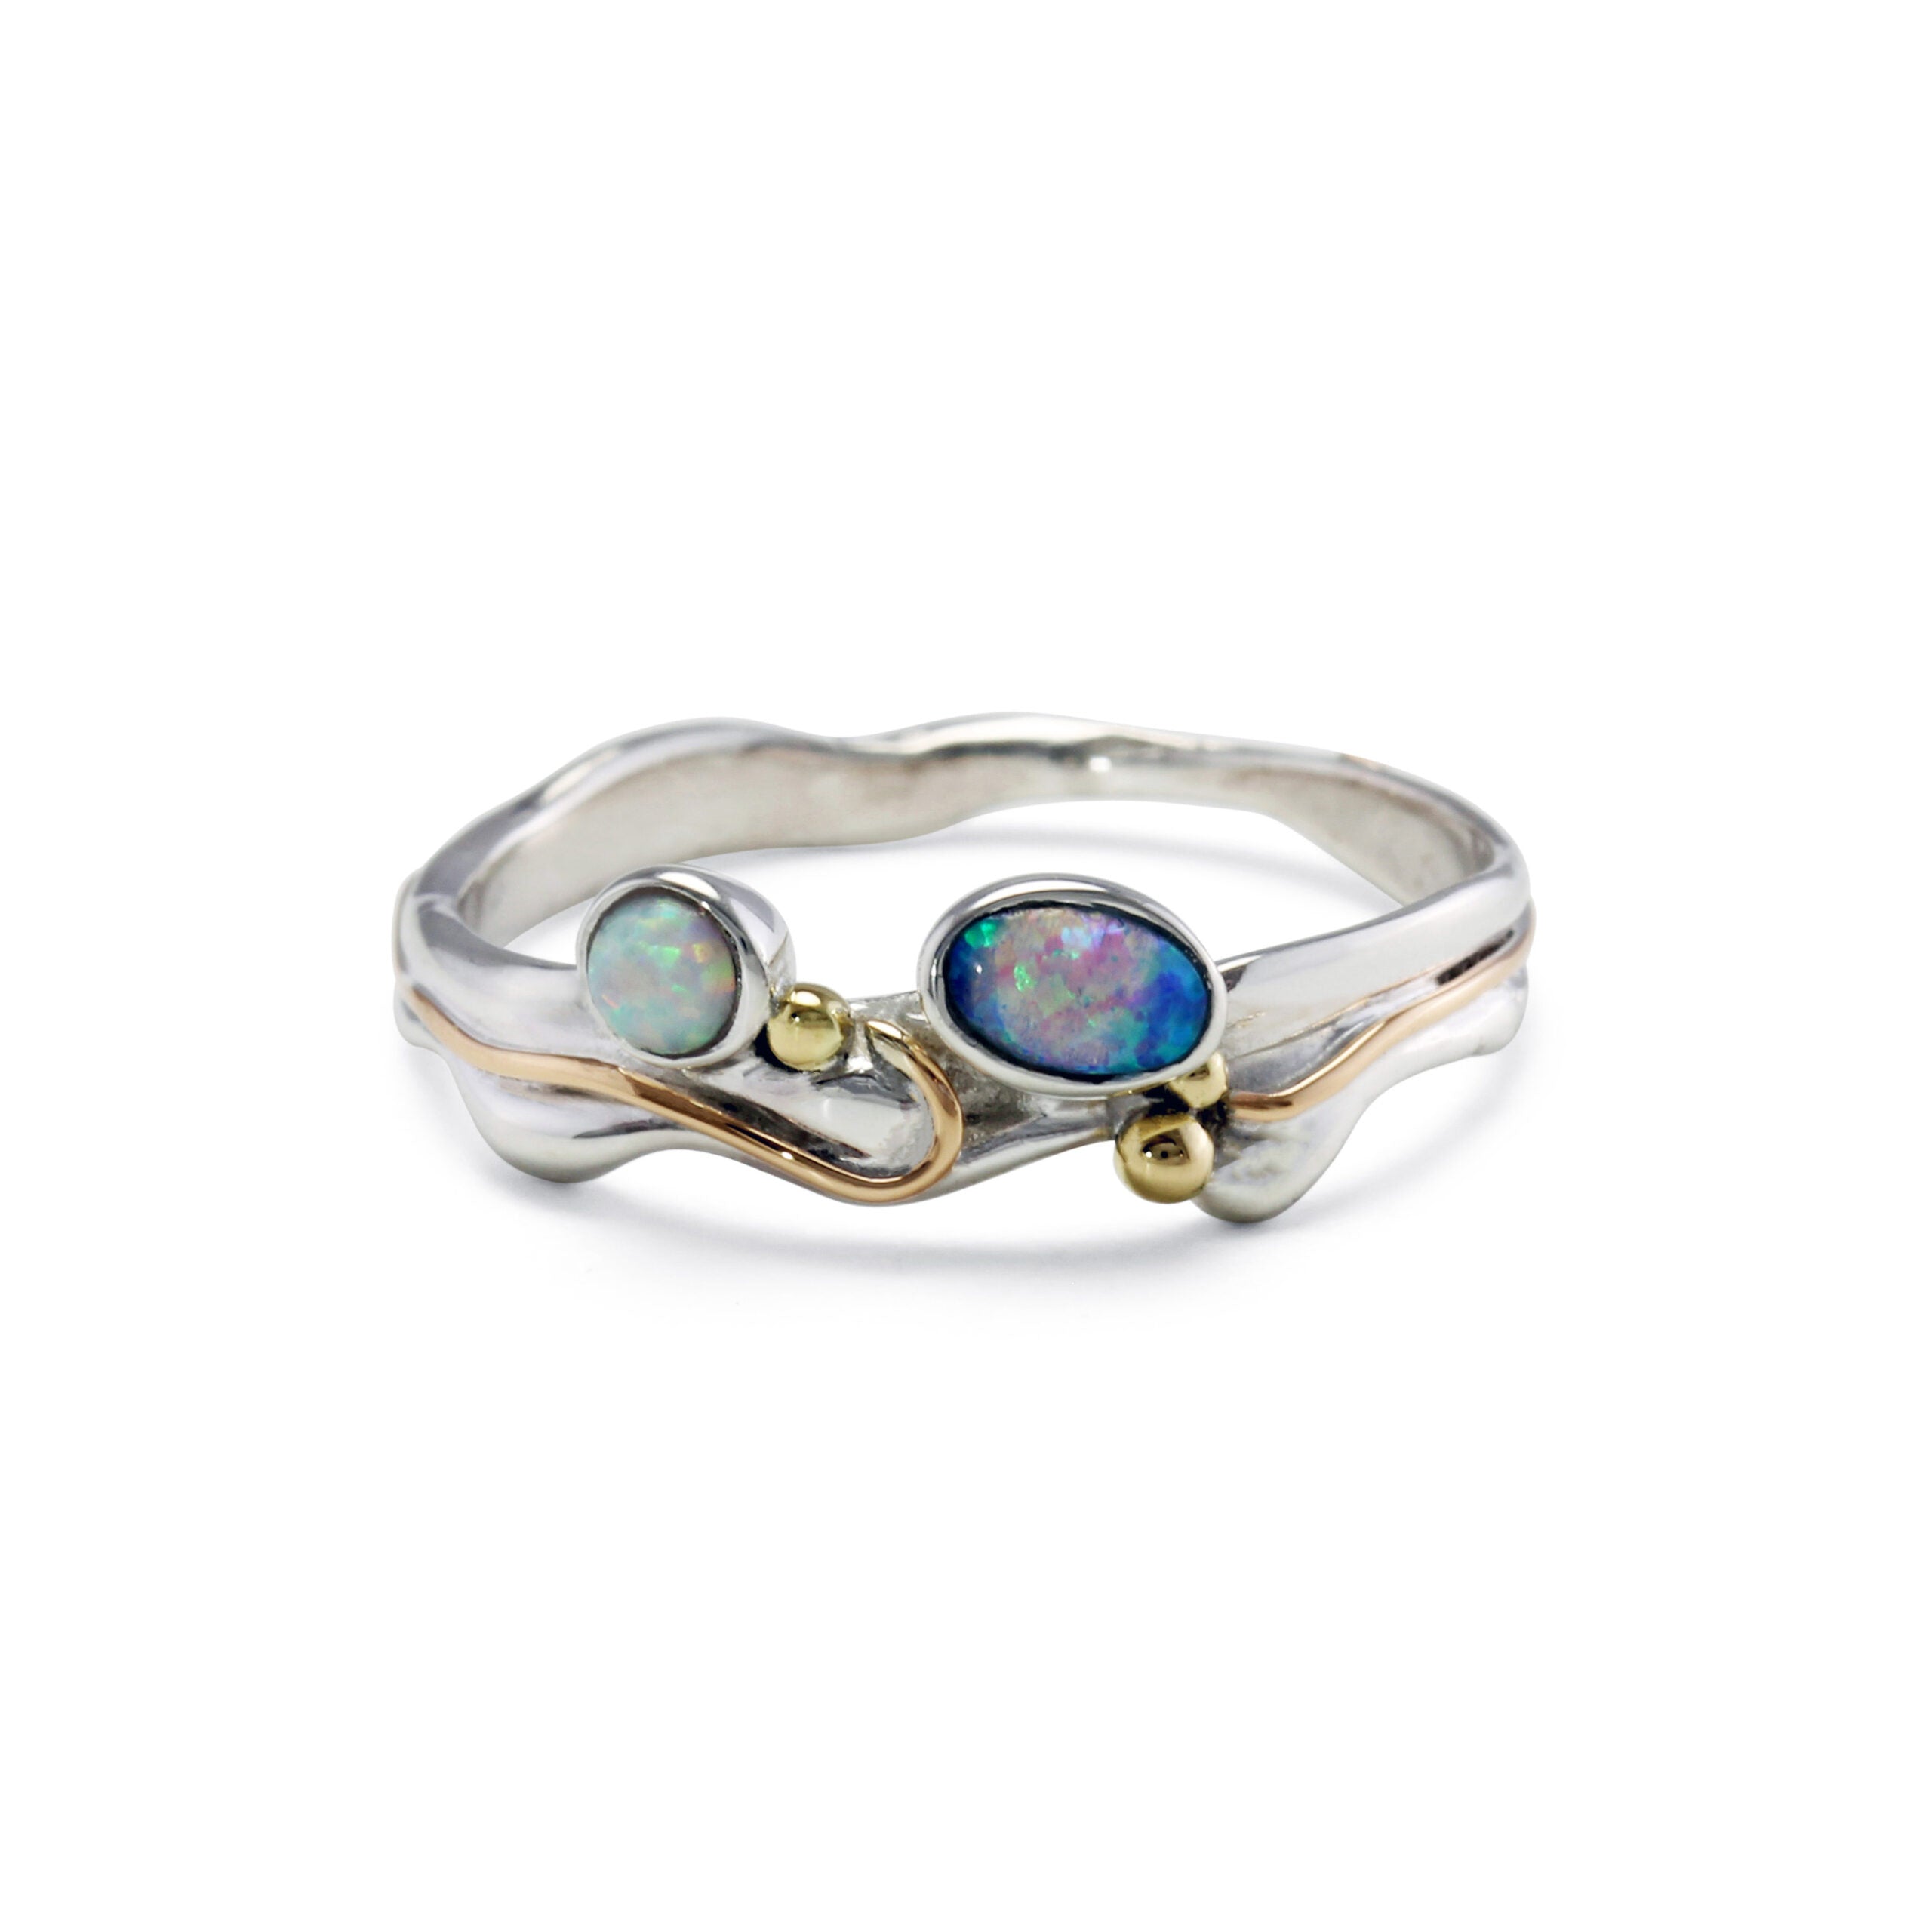 Blue & White Opalite Ring - The Nancy Smillie Shop - Art, Jewellery & Designer Gifts Glasgow